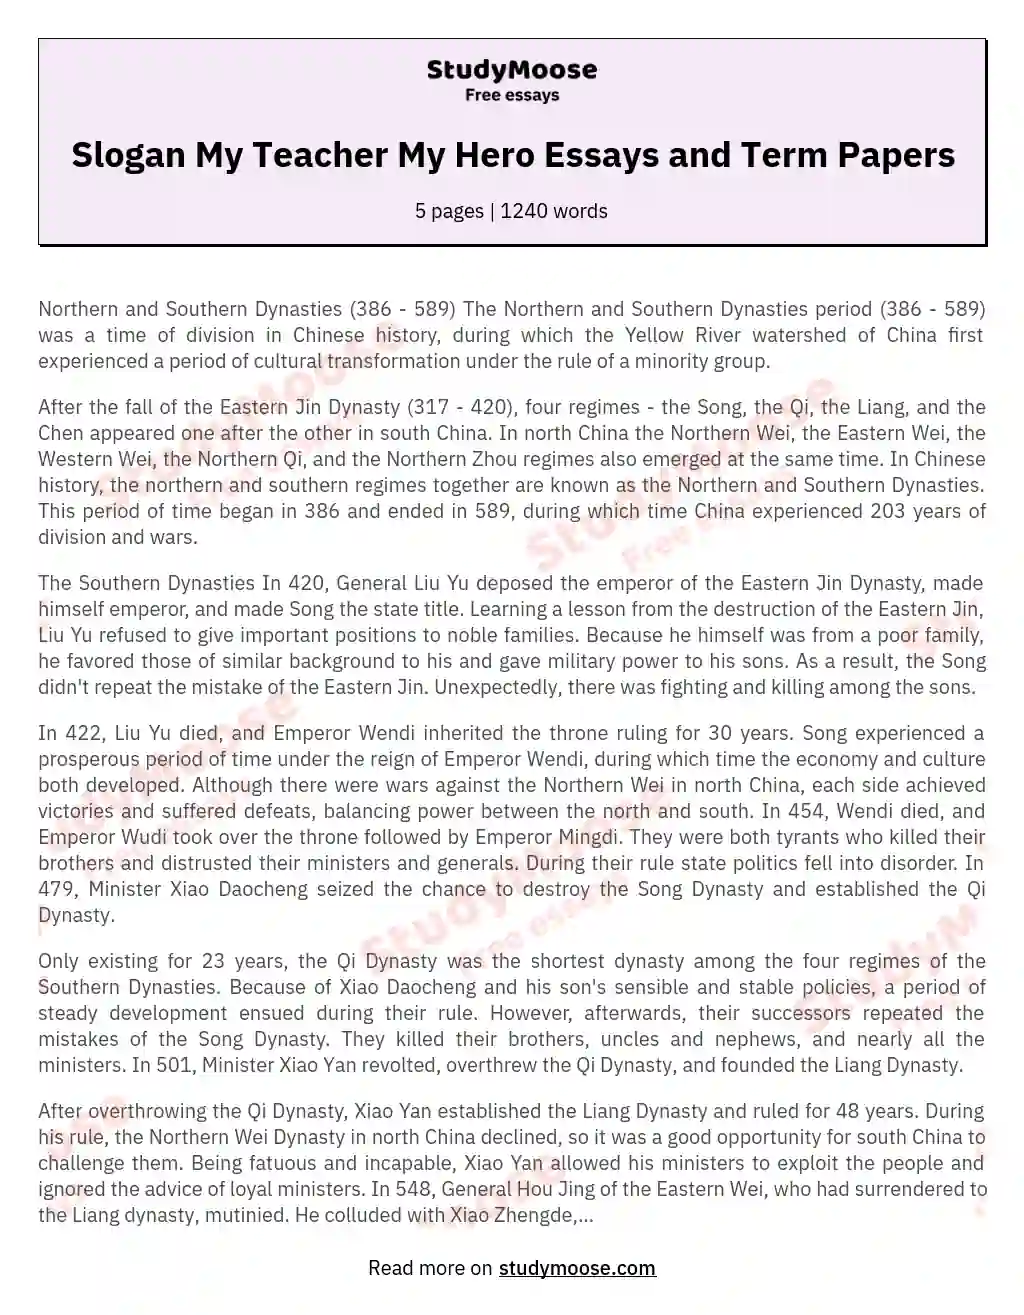 Slogan My Teacher My Hero Essays and Term Papers essay